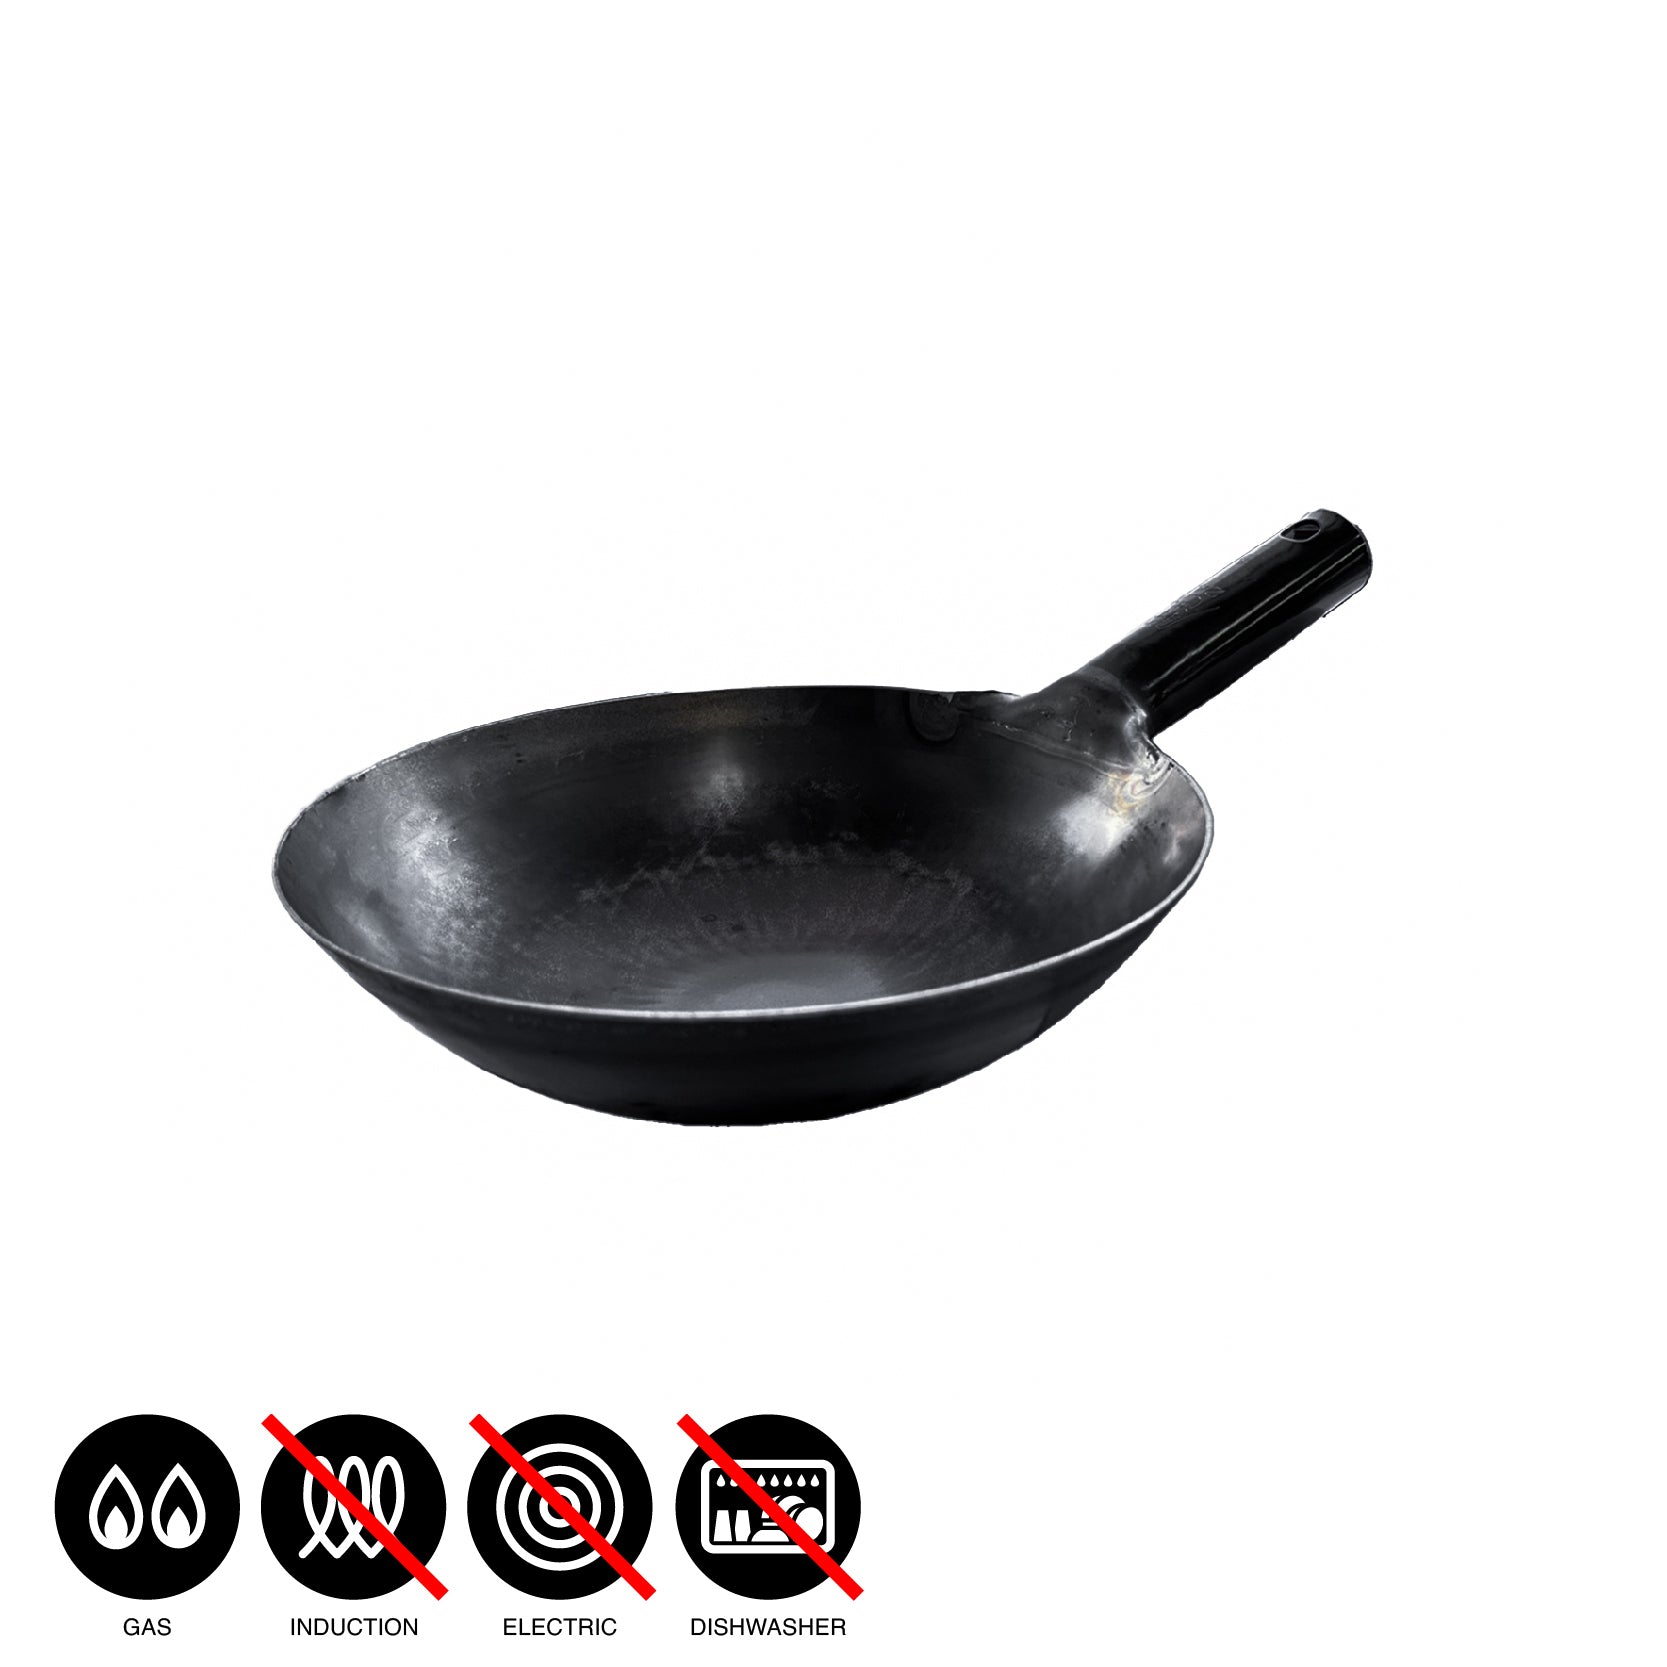 Hammered single handle wok 1.2mm / 240 - 300mm